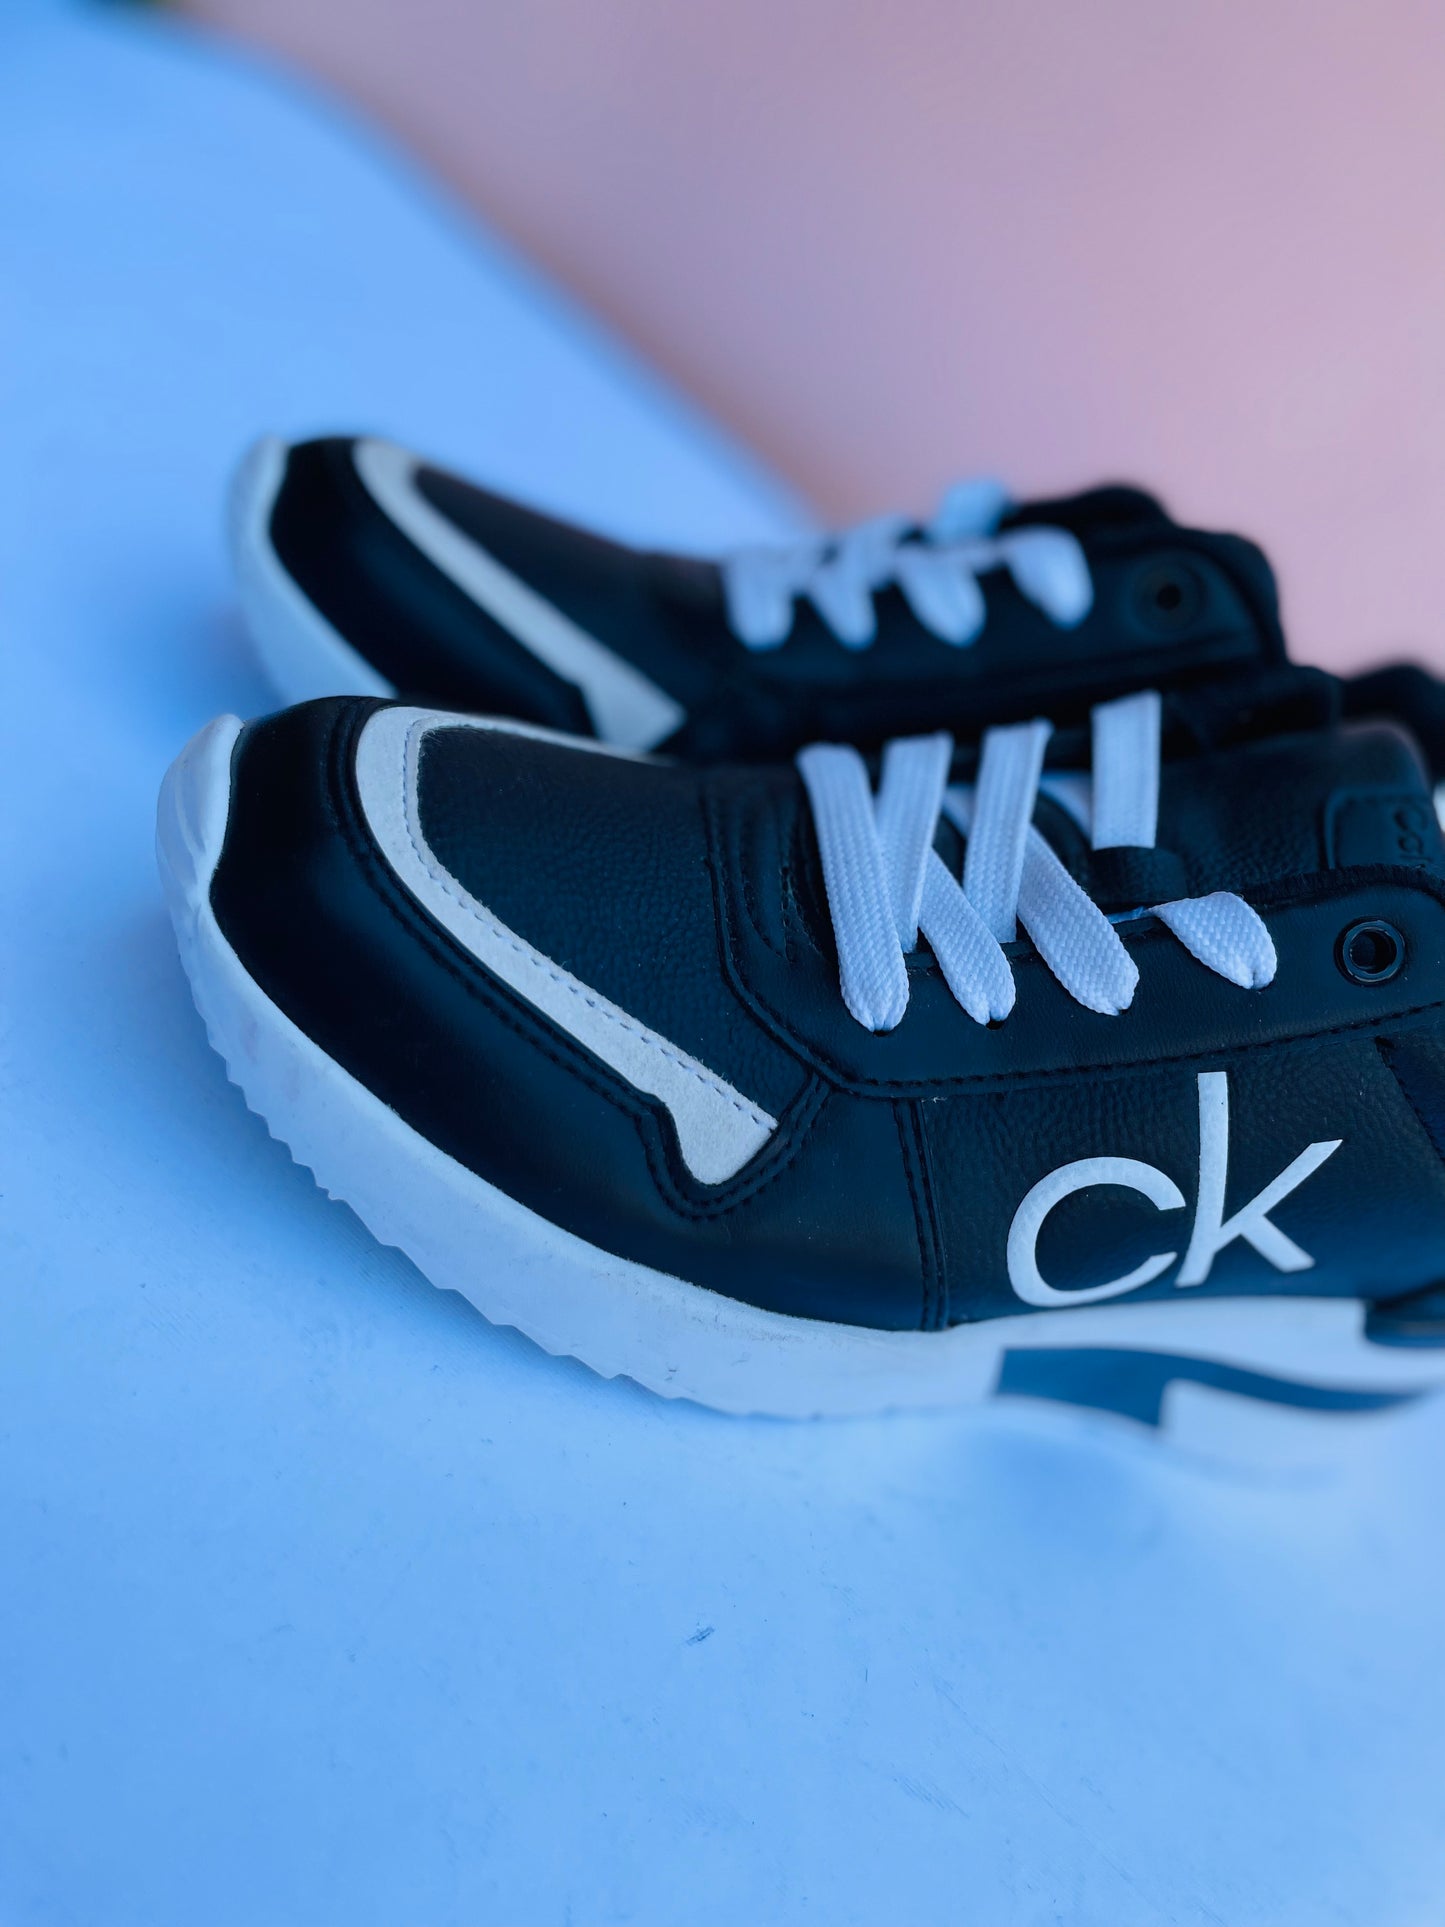 Calvin Klein sneakers